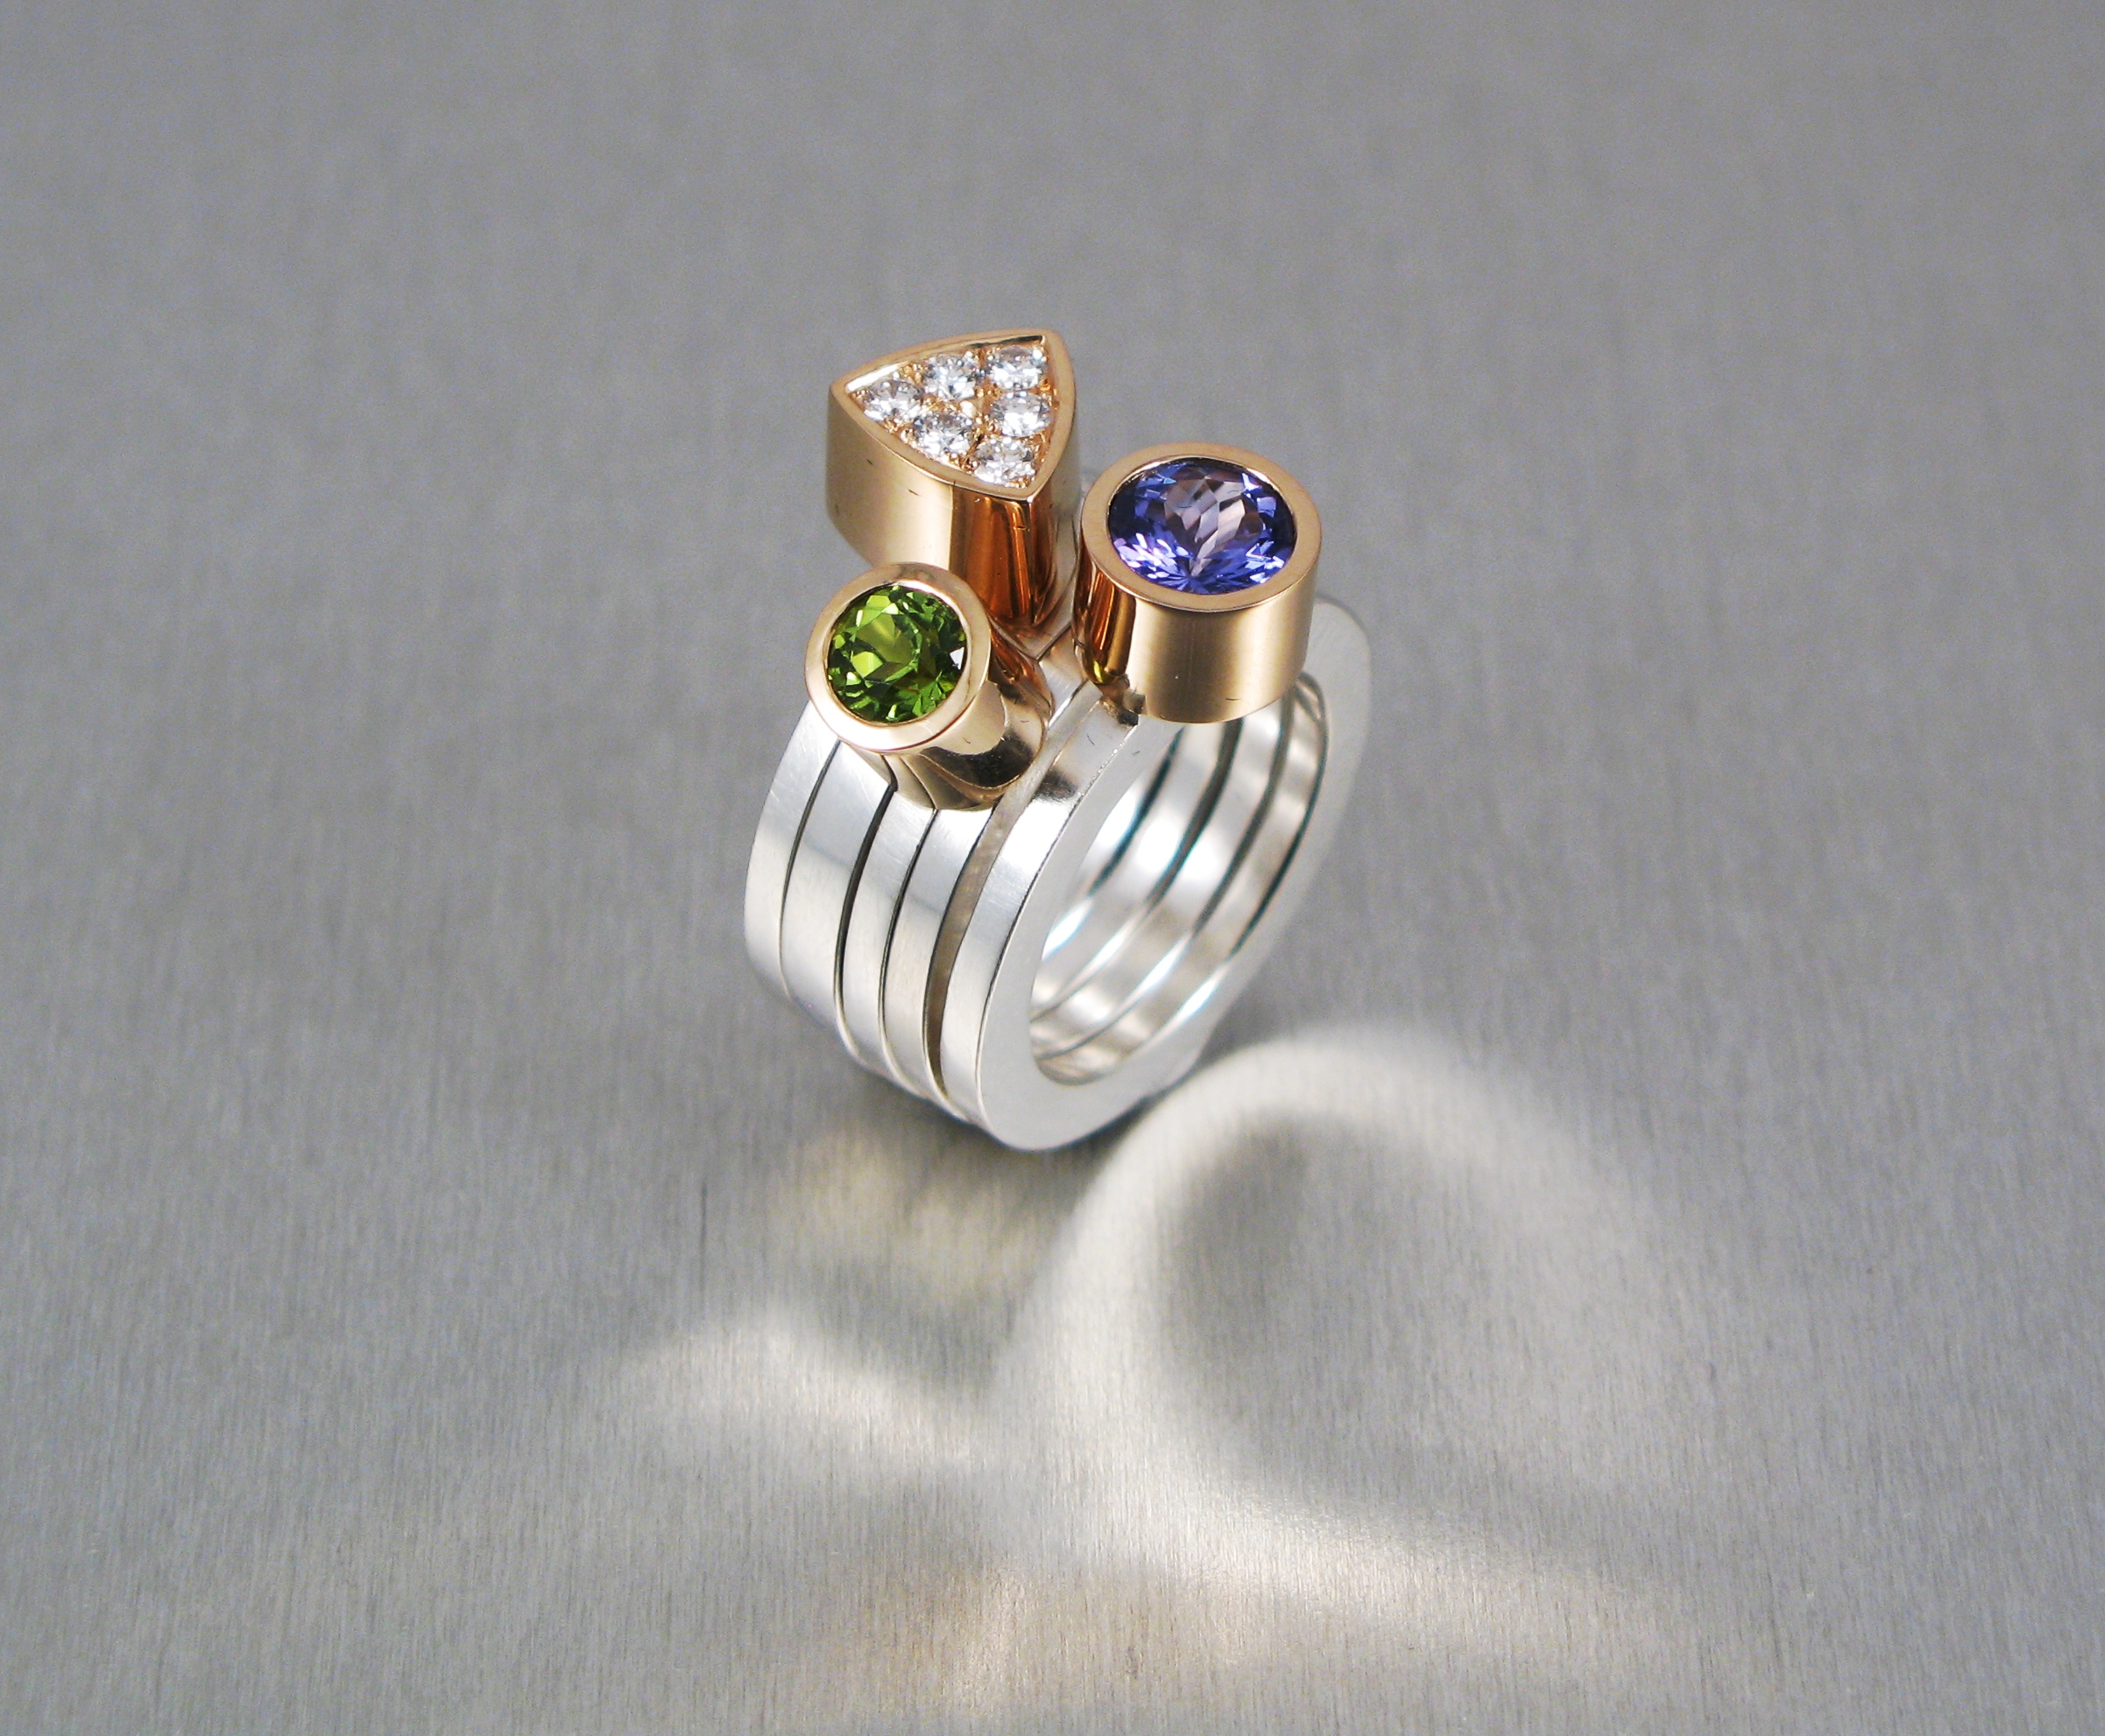 Ring, ”Pusselringar”, silver, guld, tanzanit, peridot och briljanter.